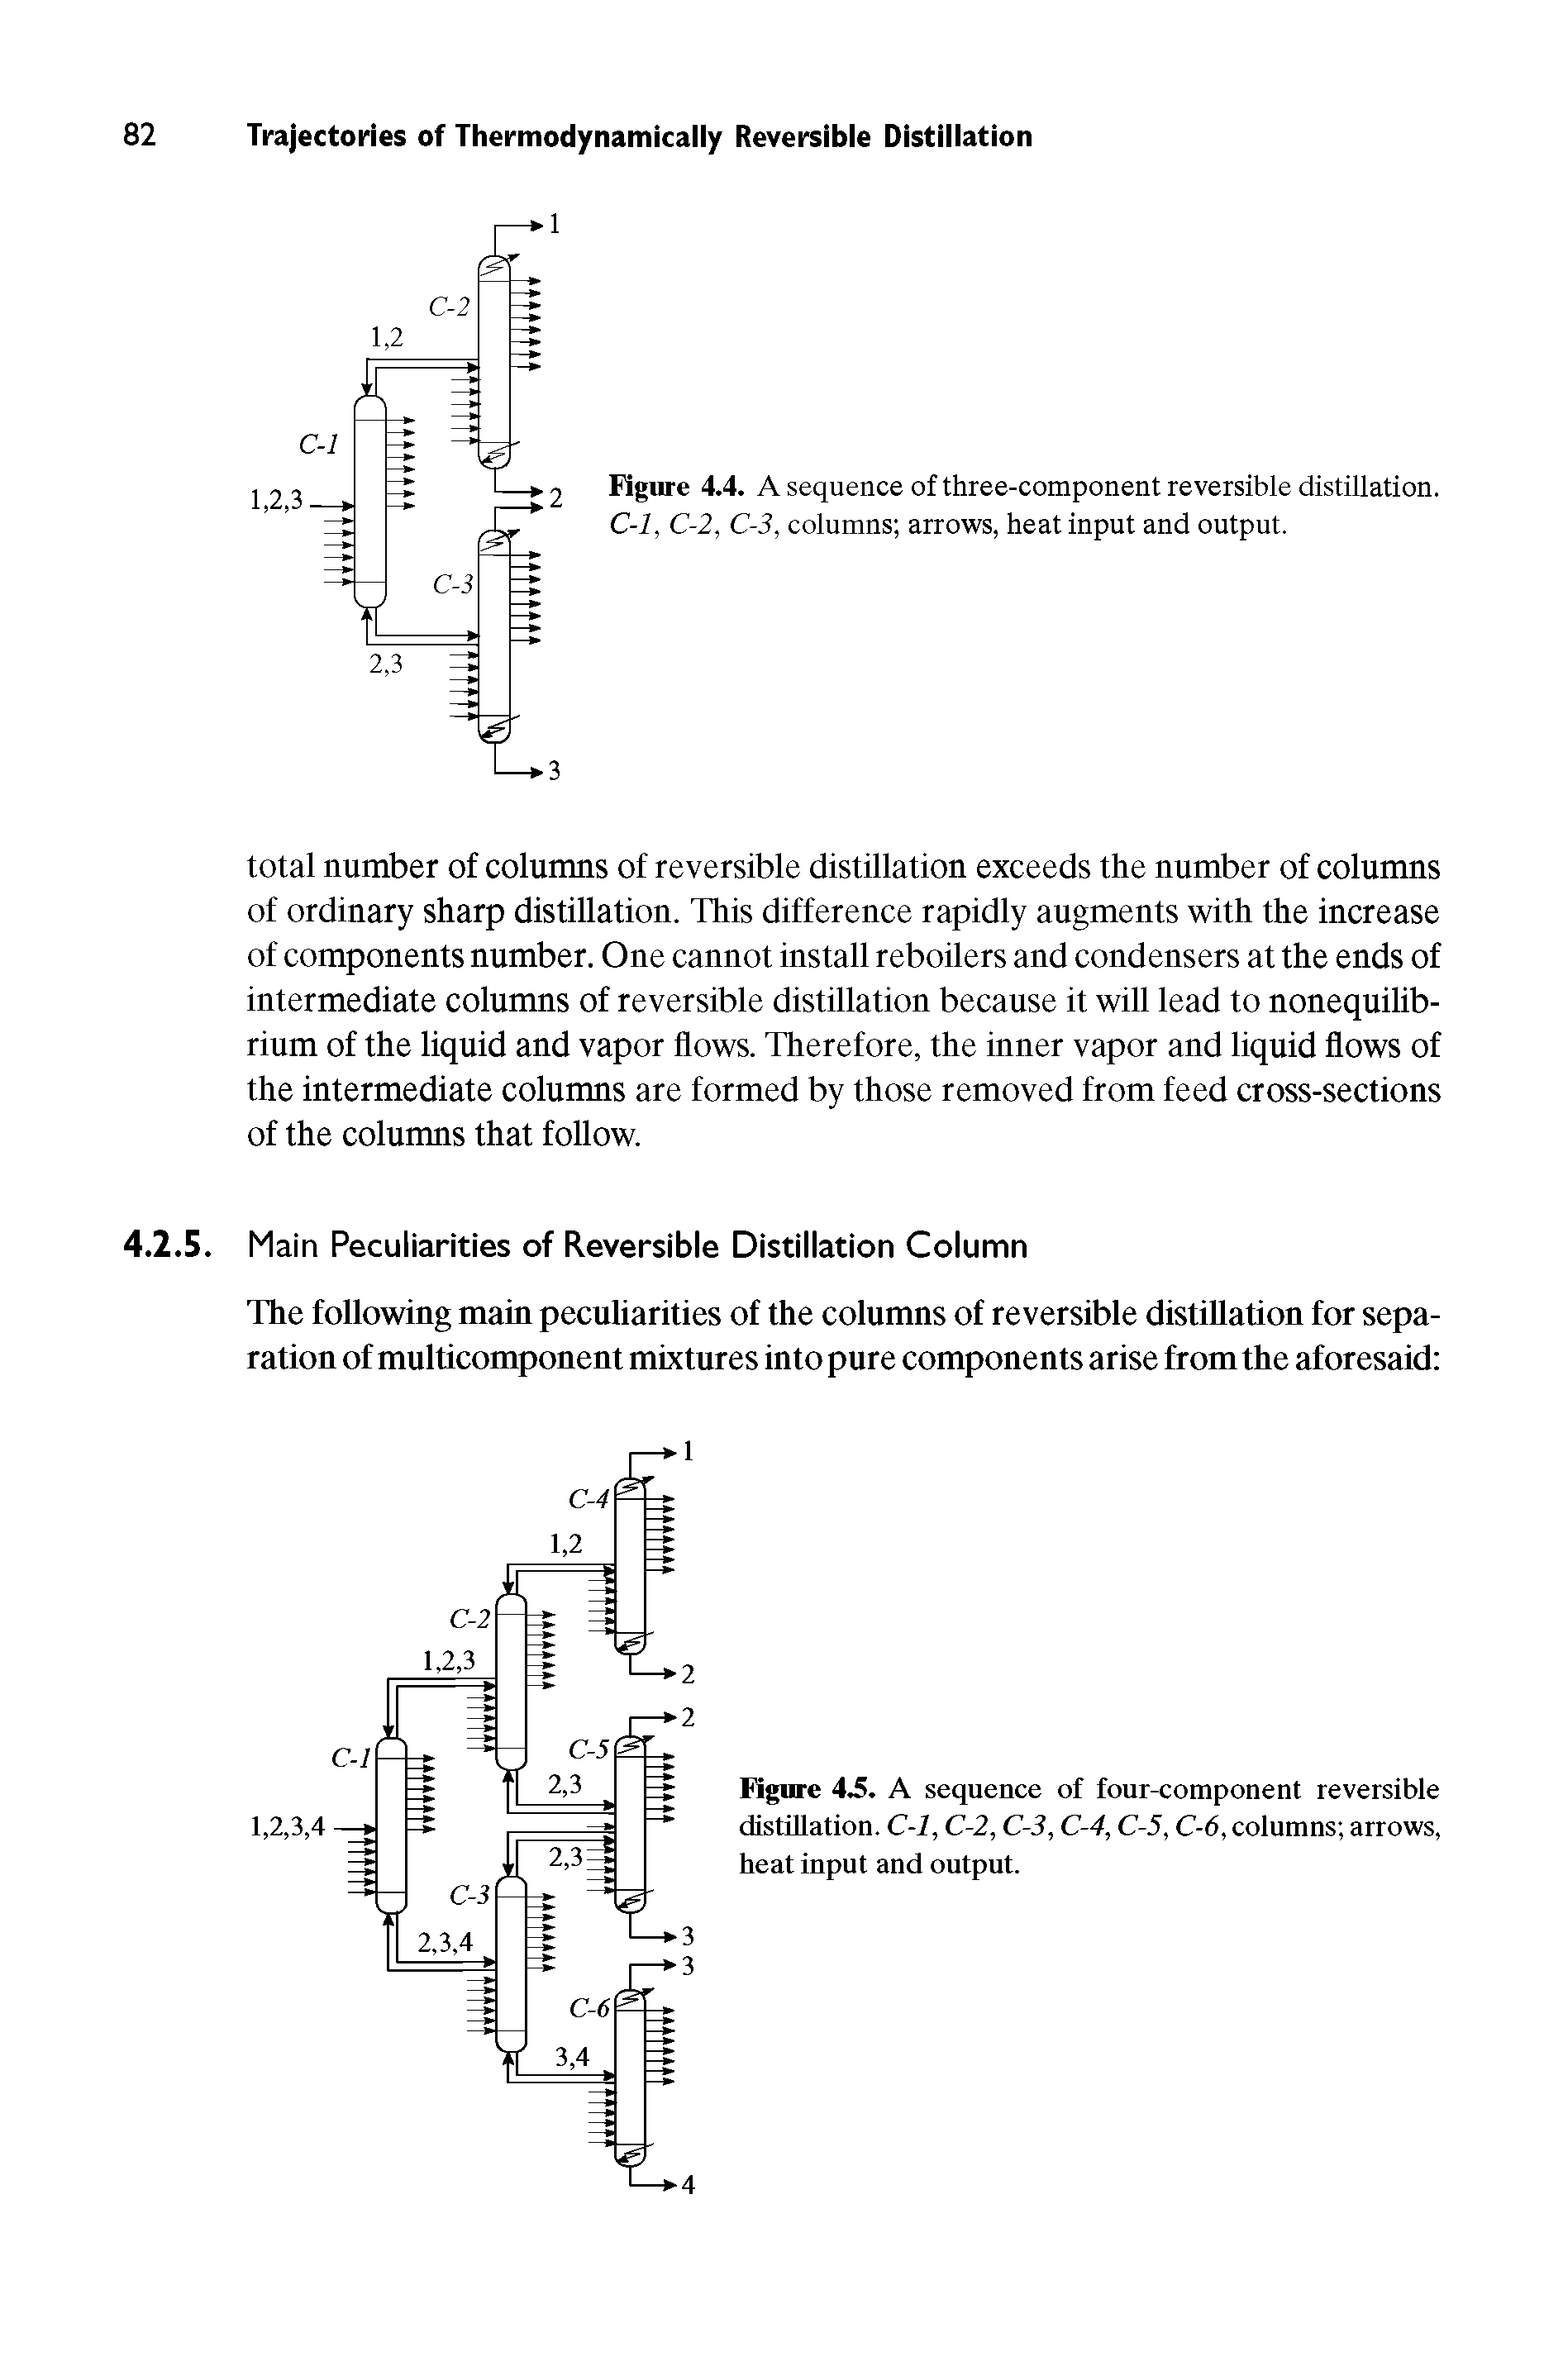 Figure 4.5. A sequence of four-component reversible distillation. C-1, C-2, C-3, C-4, C-5, C-6, columns arrows, heat input and output.